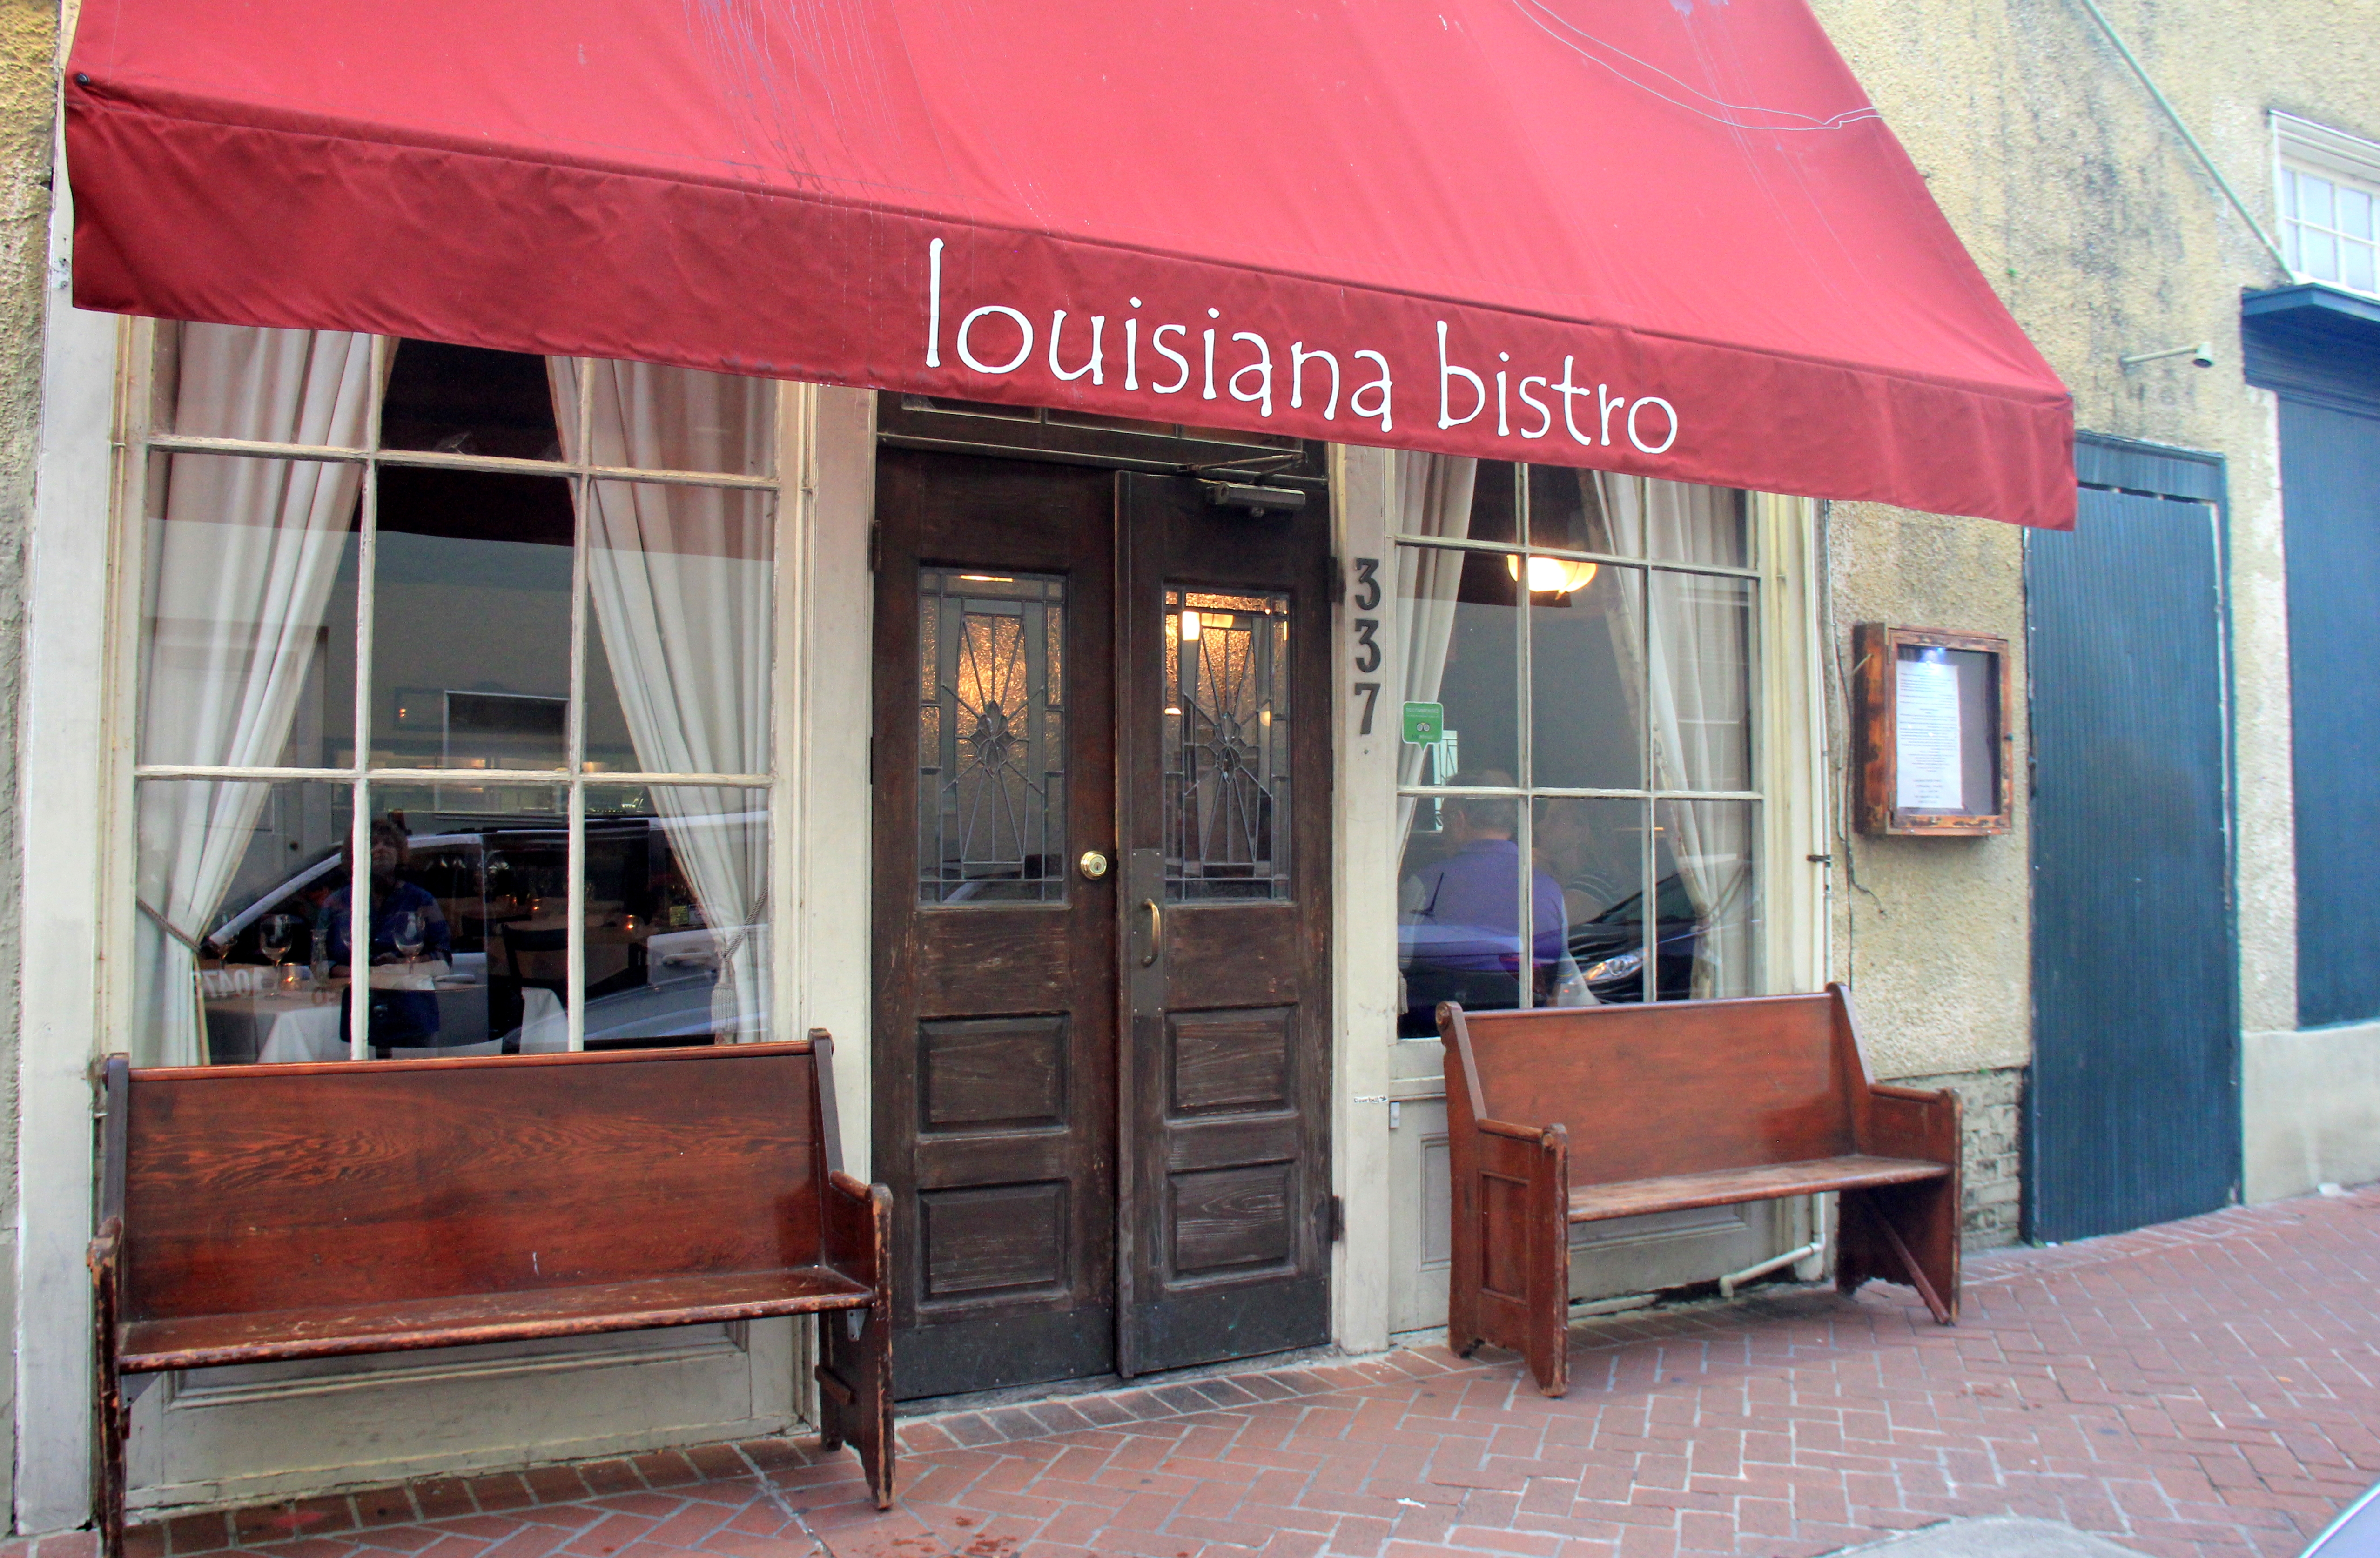 Louisiana Bistro Favorite New Orleans Restaurants